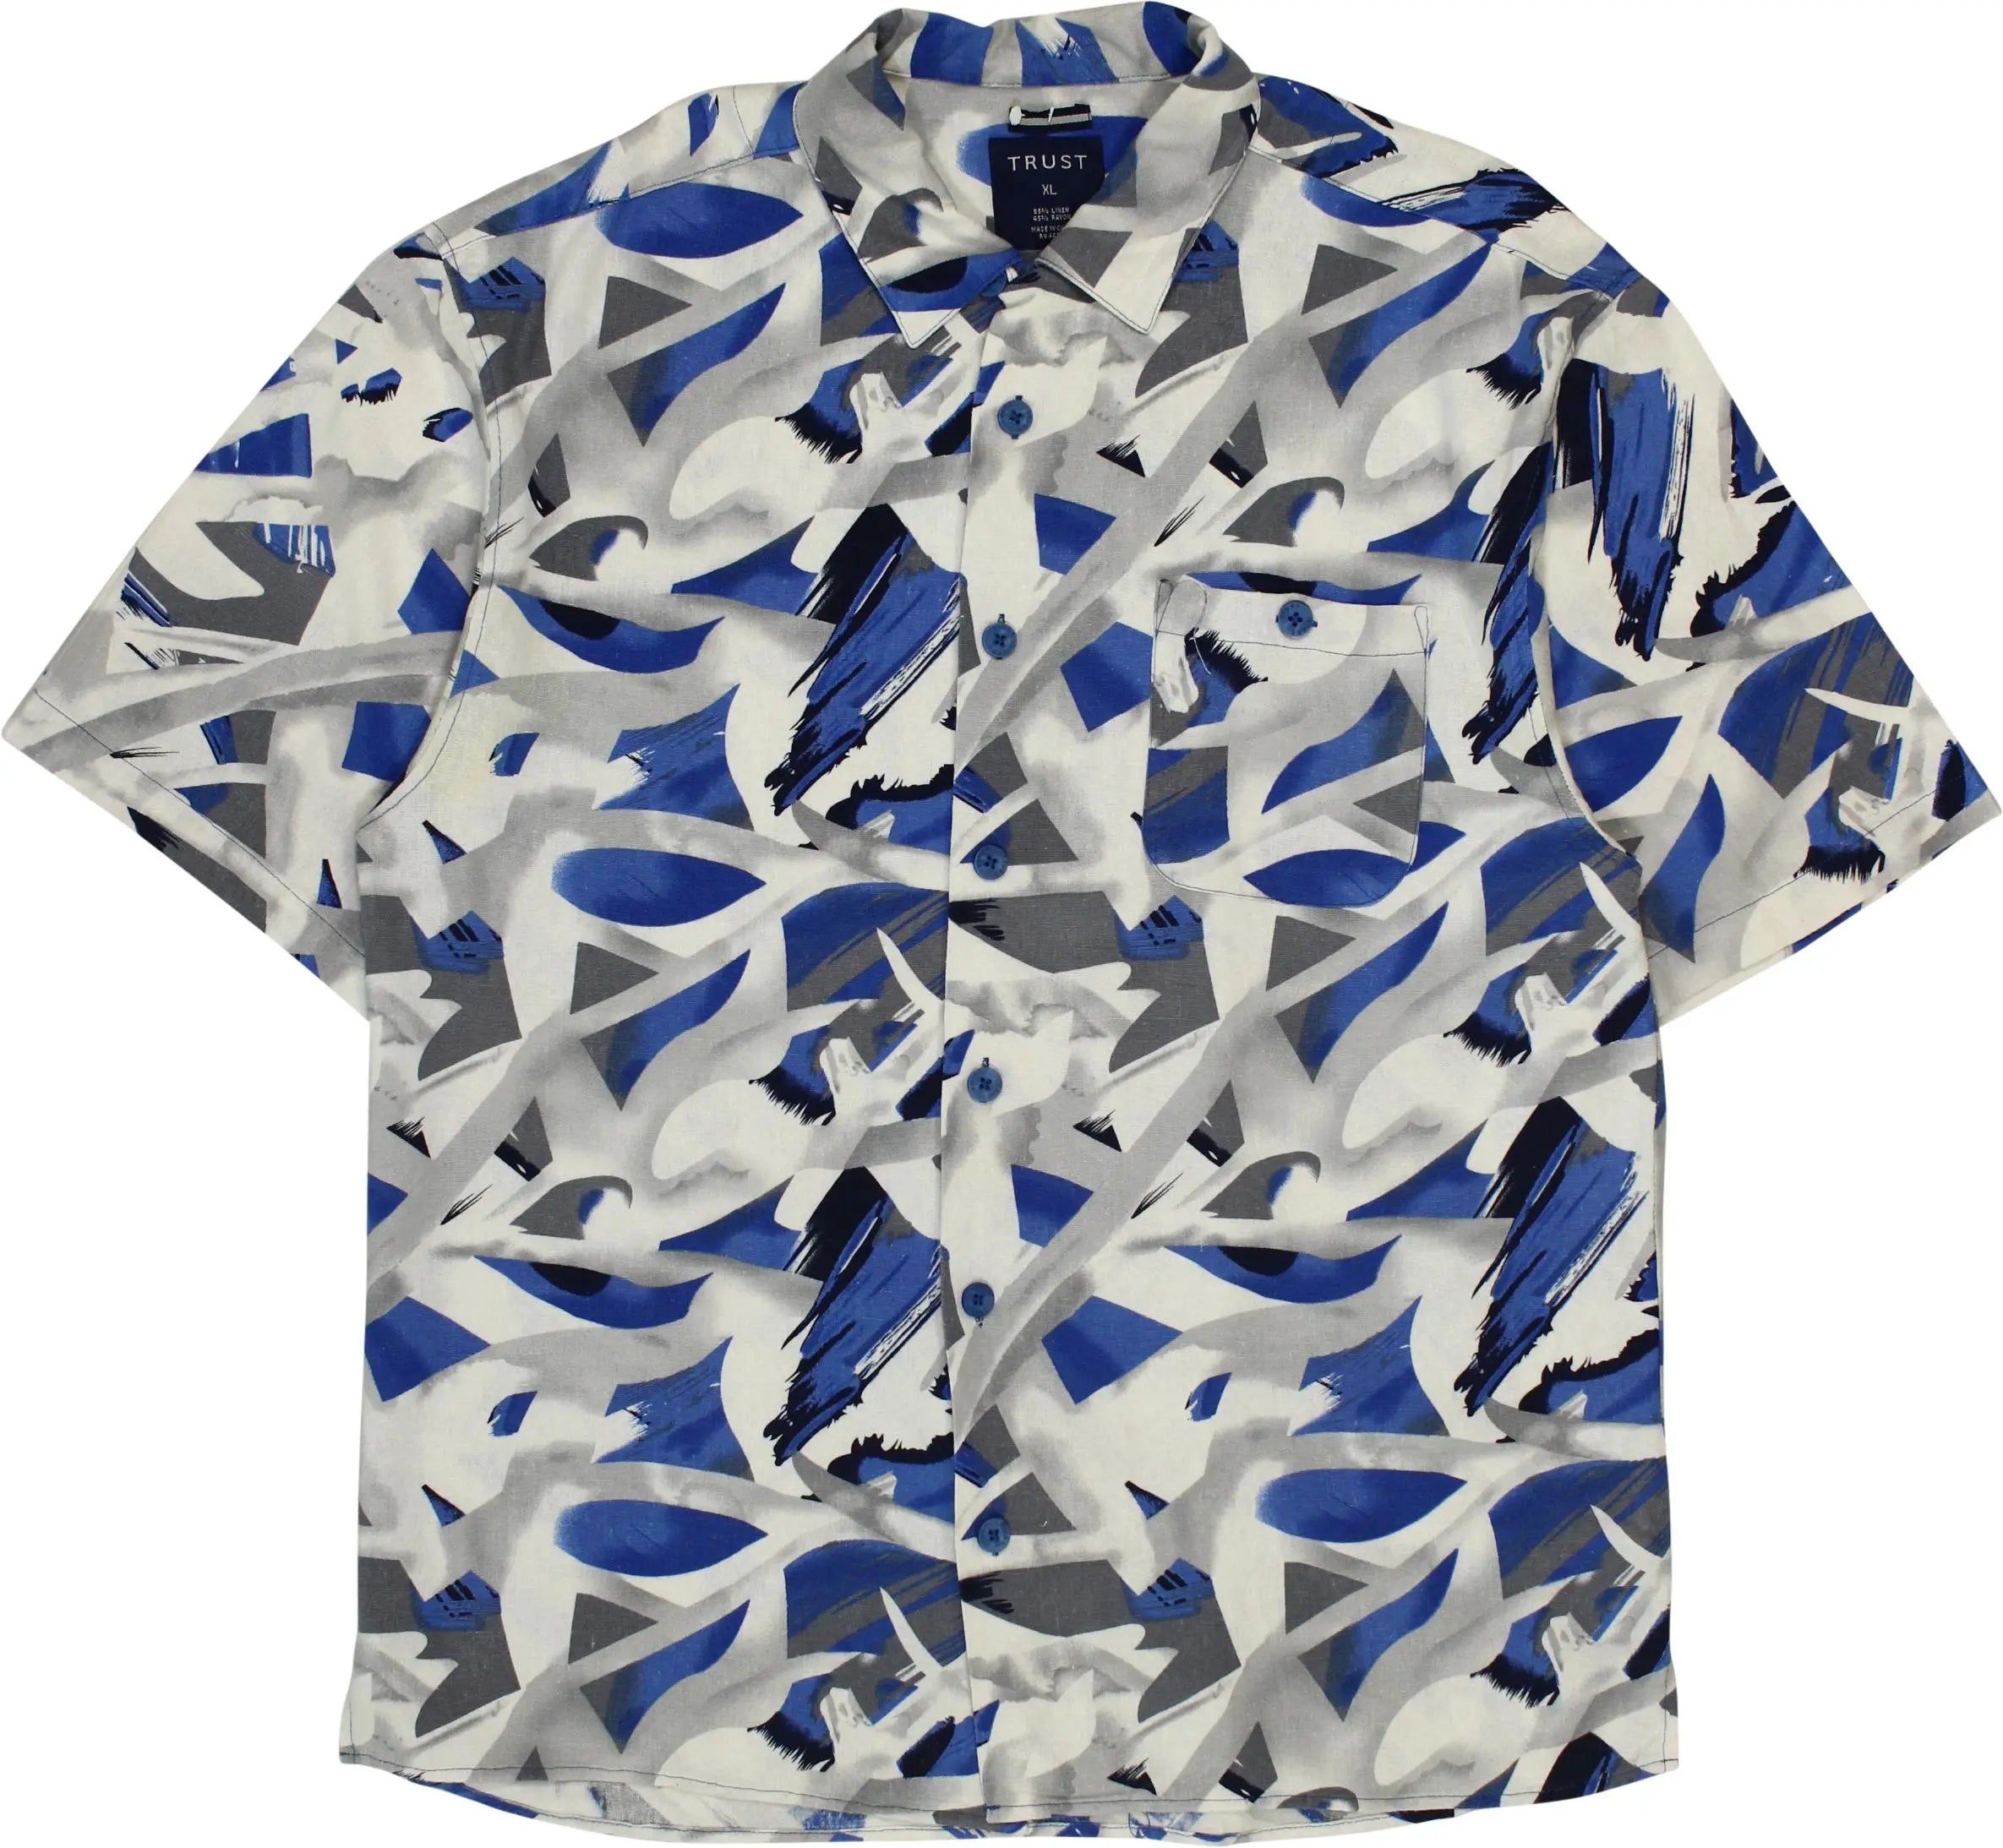 Trust - 90s Linen Blend Patterned Shirt- ThriftTale.com - Vintage and second handclothing